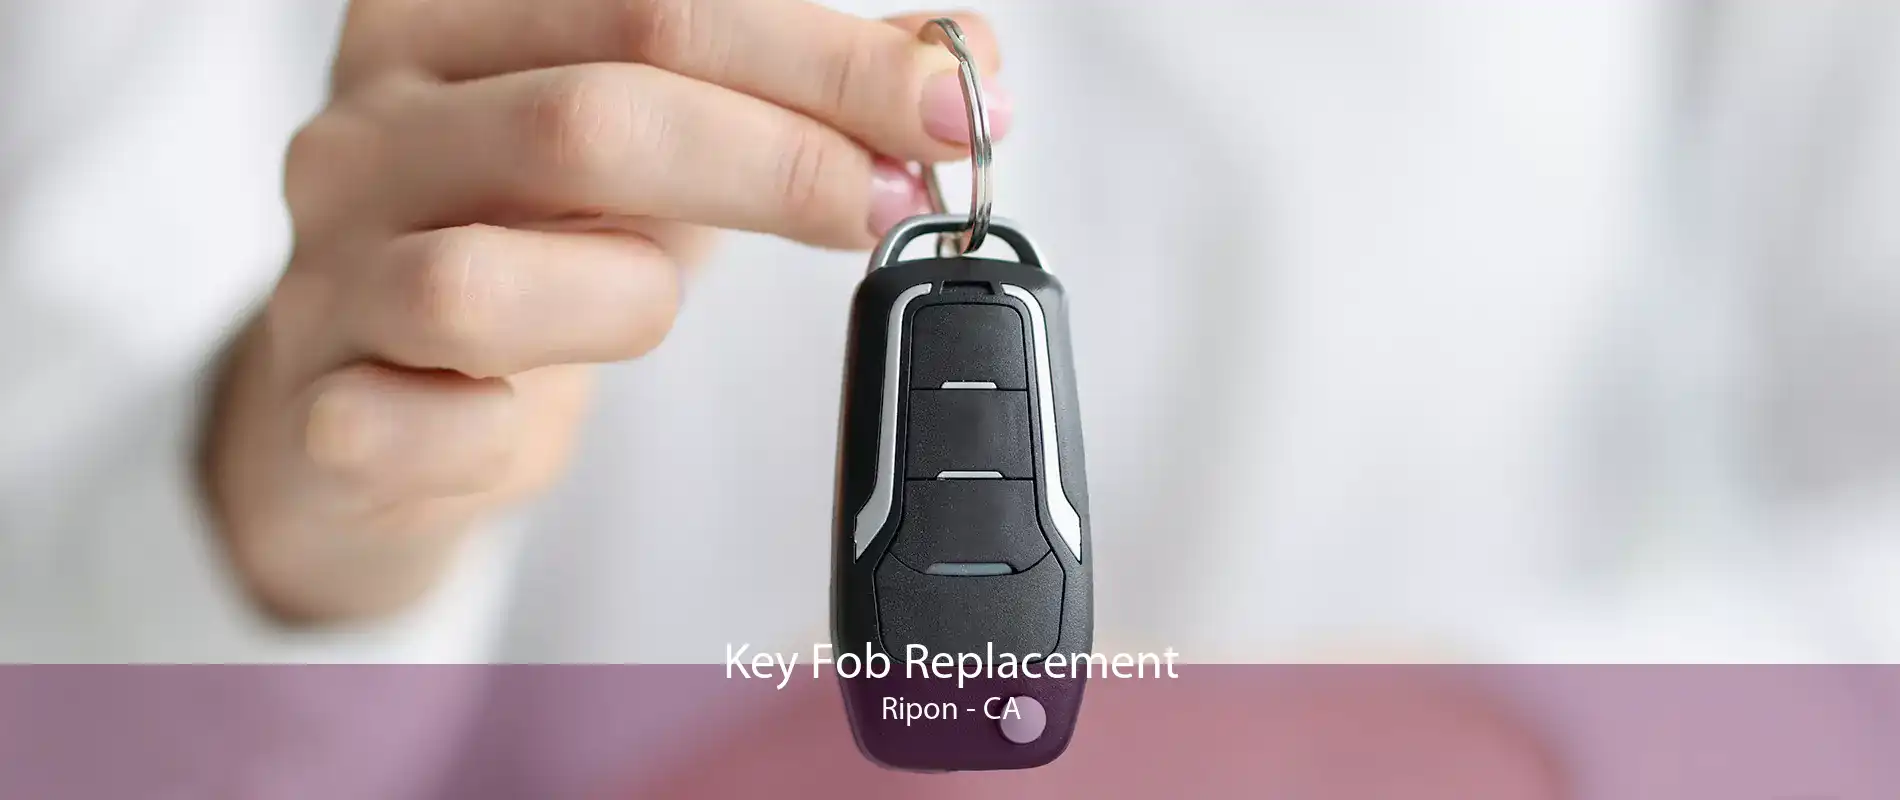 Key Fob Replacement Ripon - CA